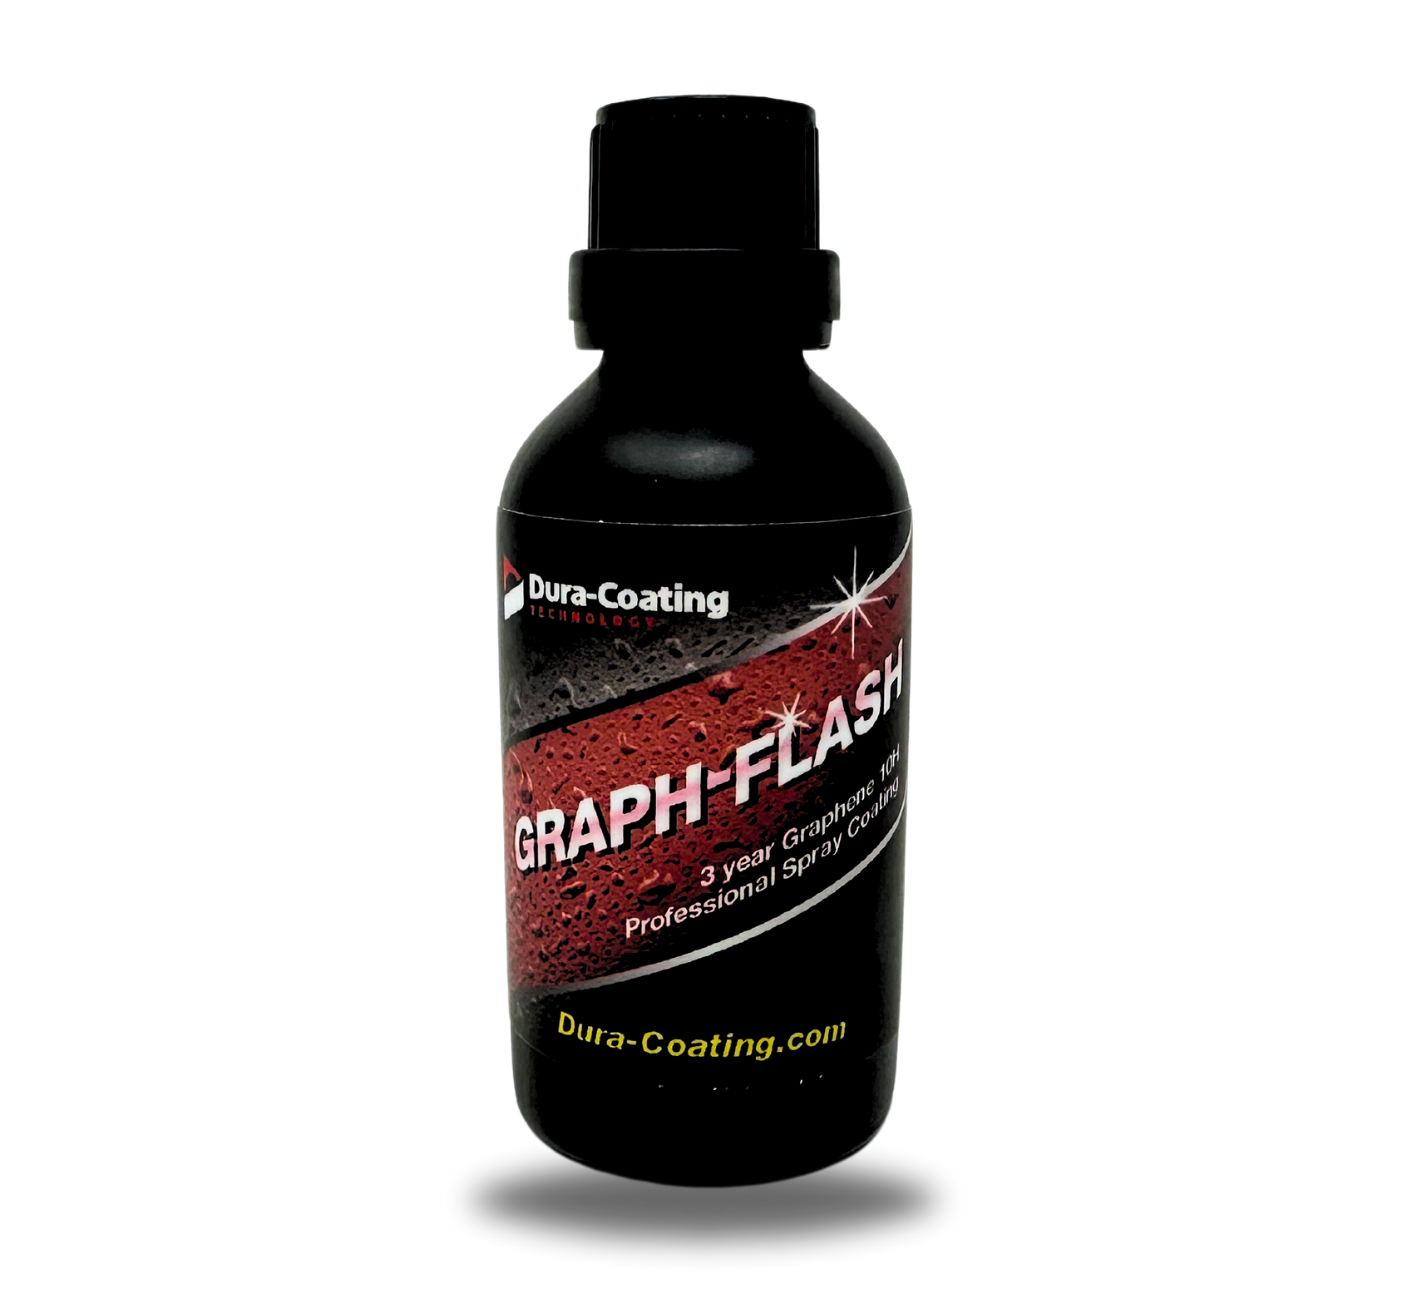 3 Year - Graph-Flash Graphene Ceramic Coating